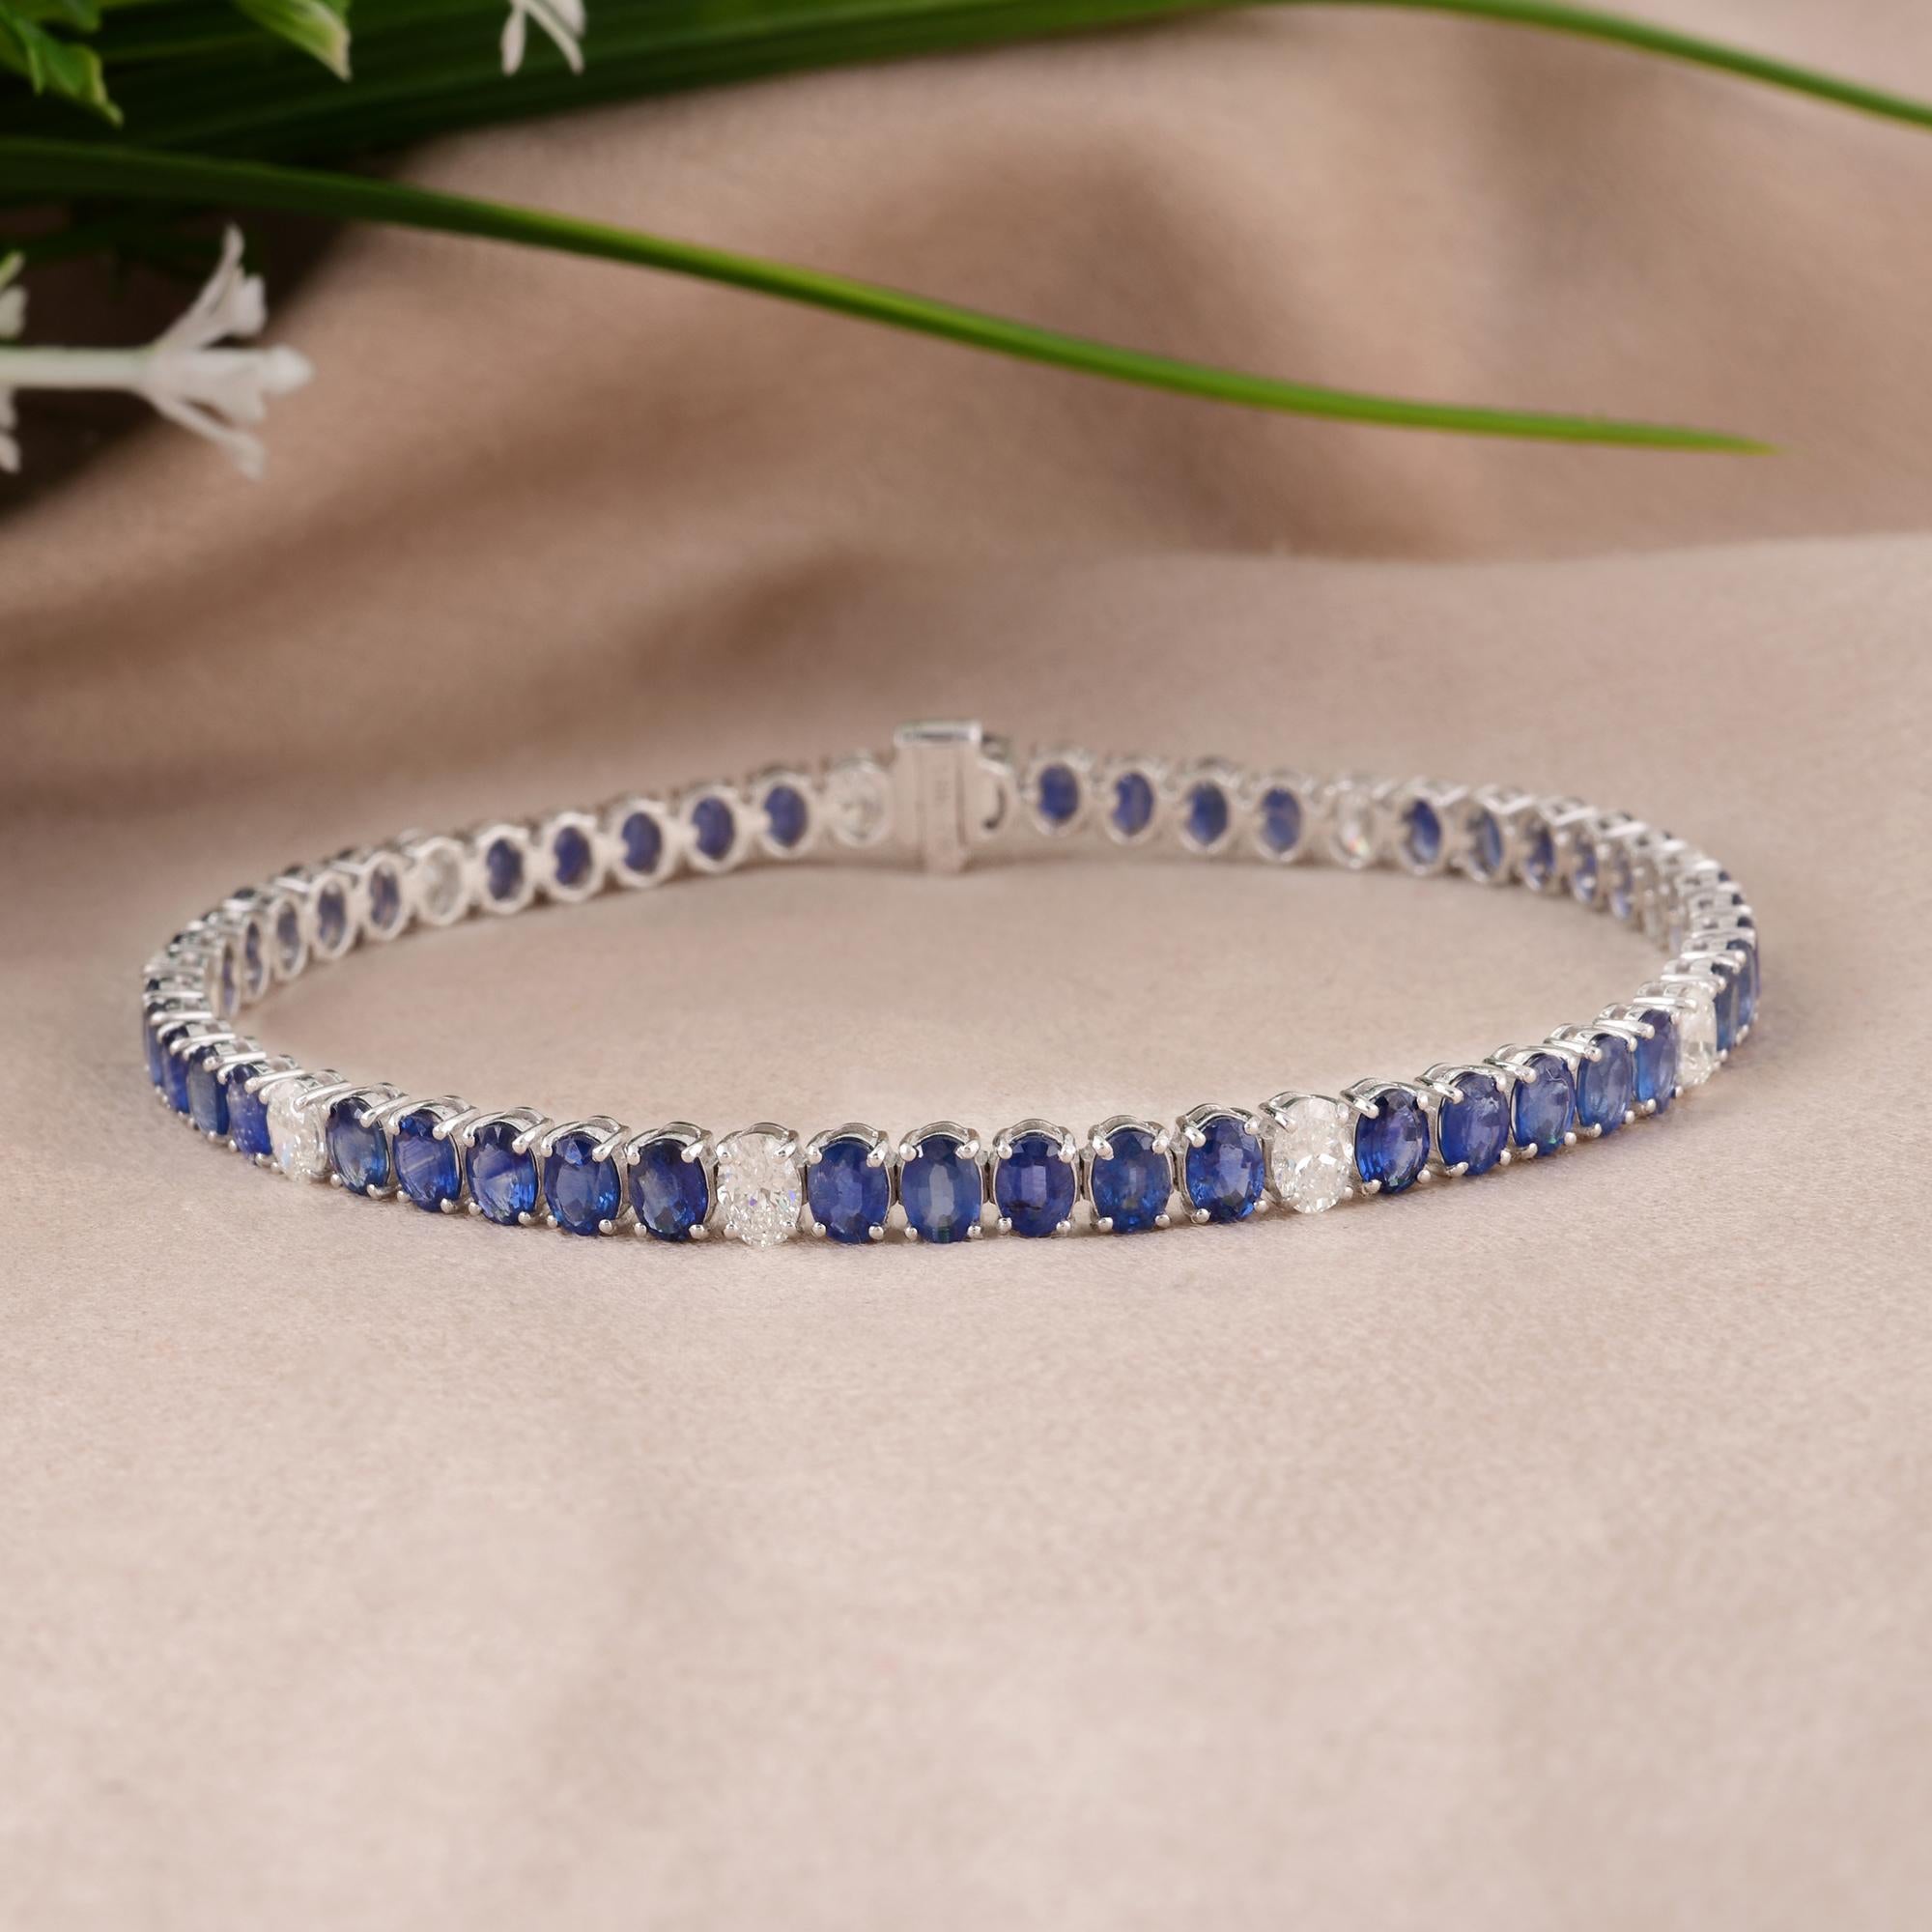 Oval Cut Natural Oval Blue Sapphire Diamond Bracelet 14 Karat White Gold Handmade Jewelry For Sale